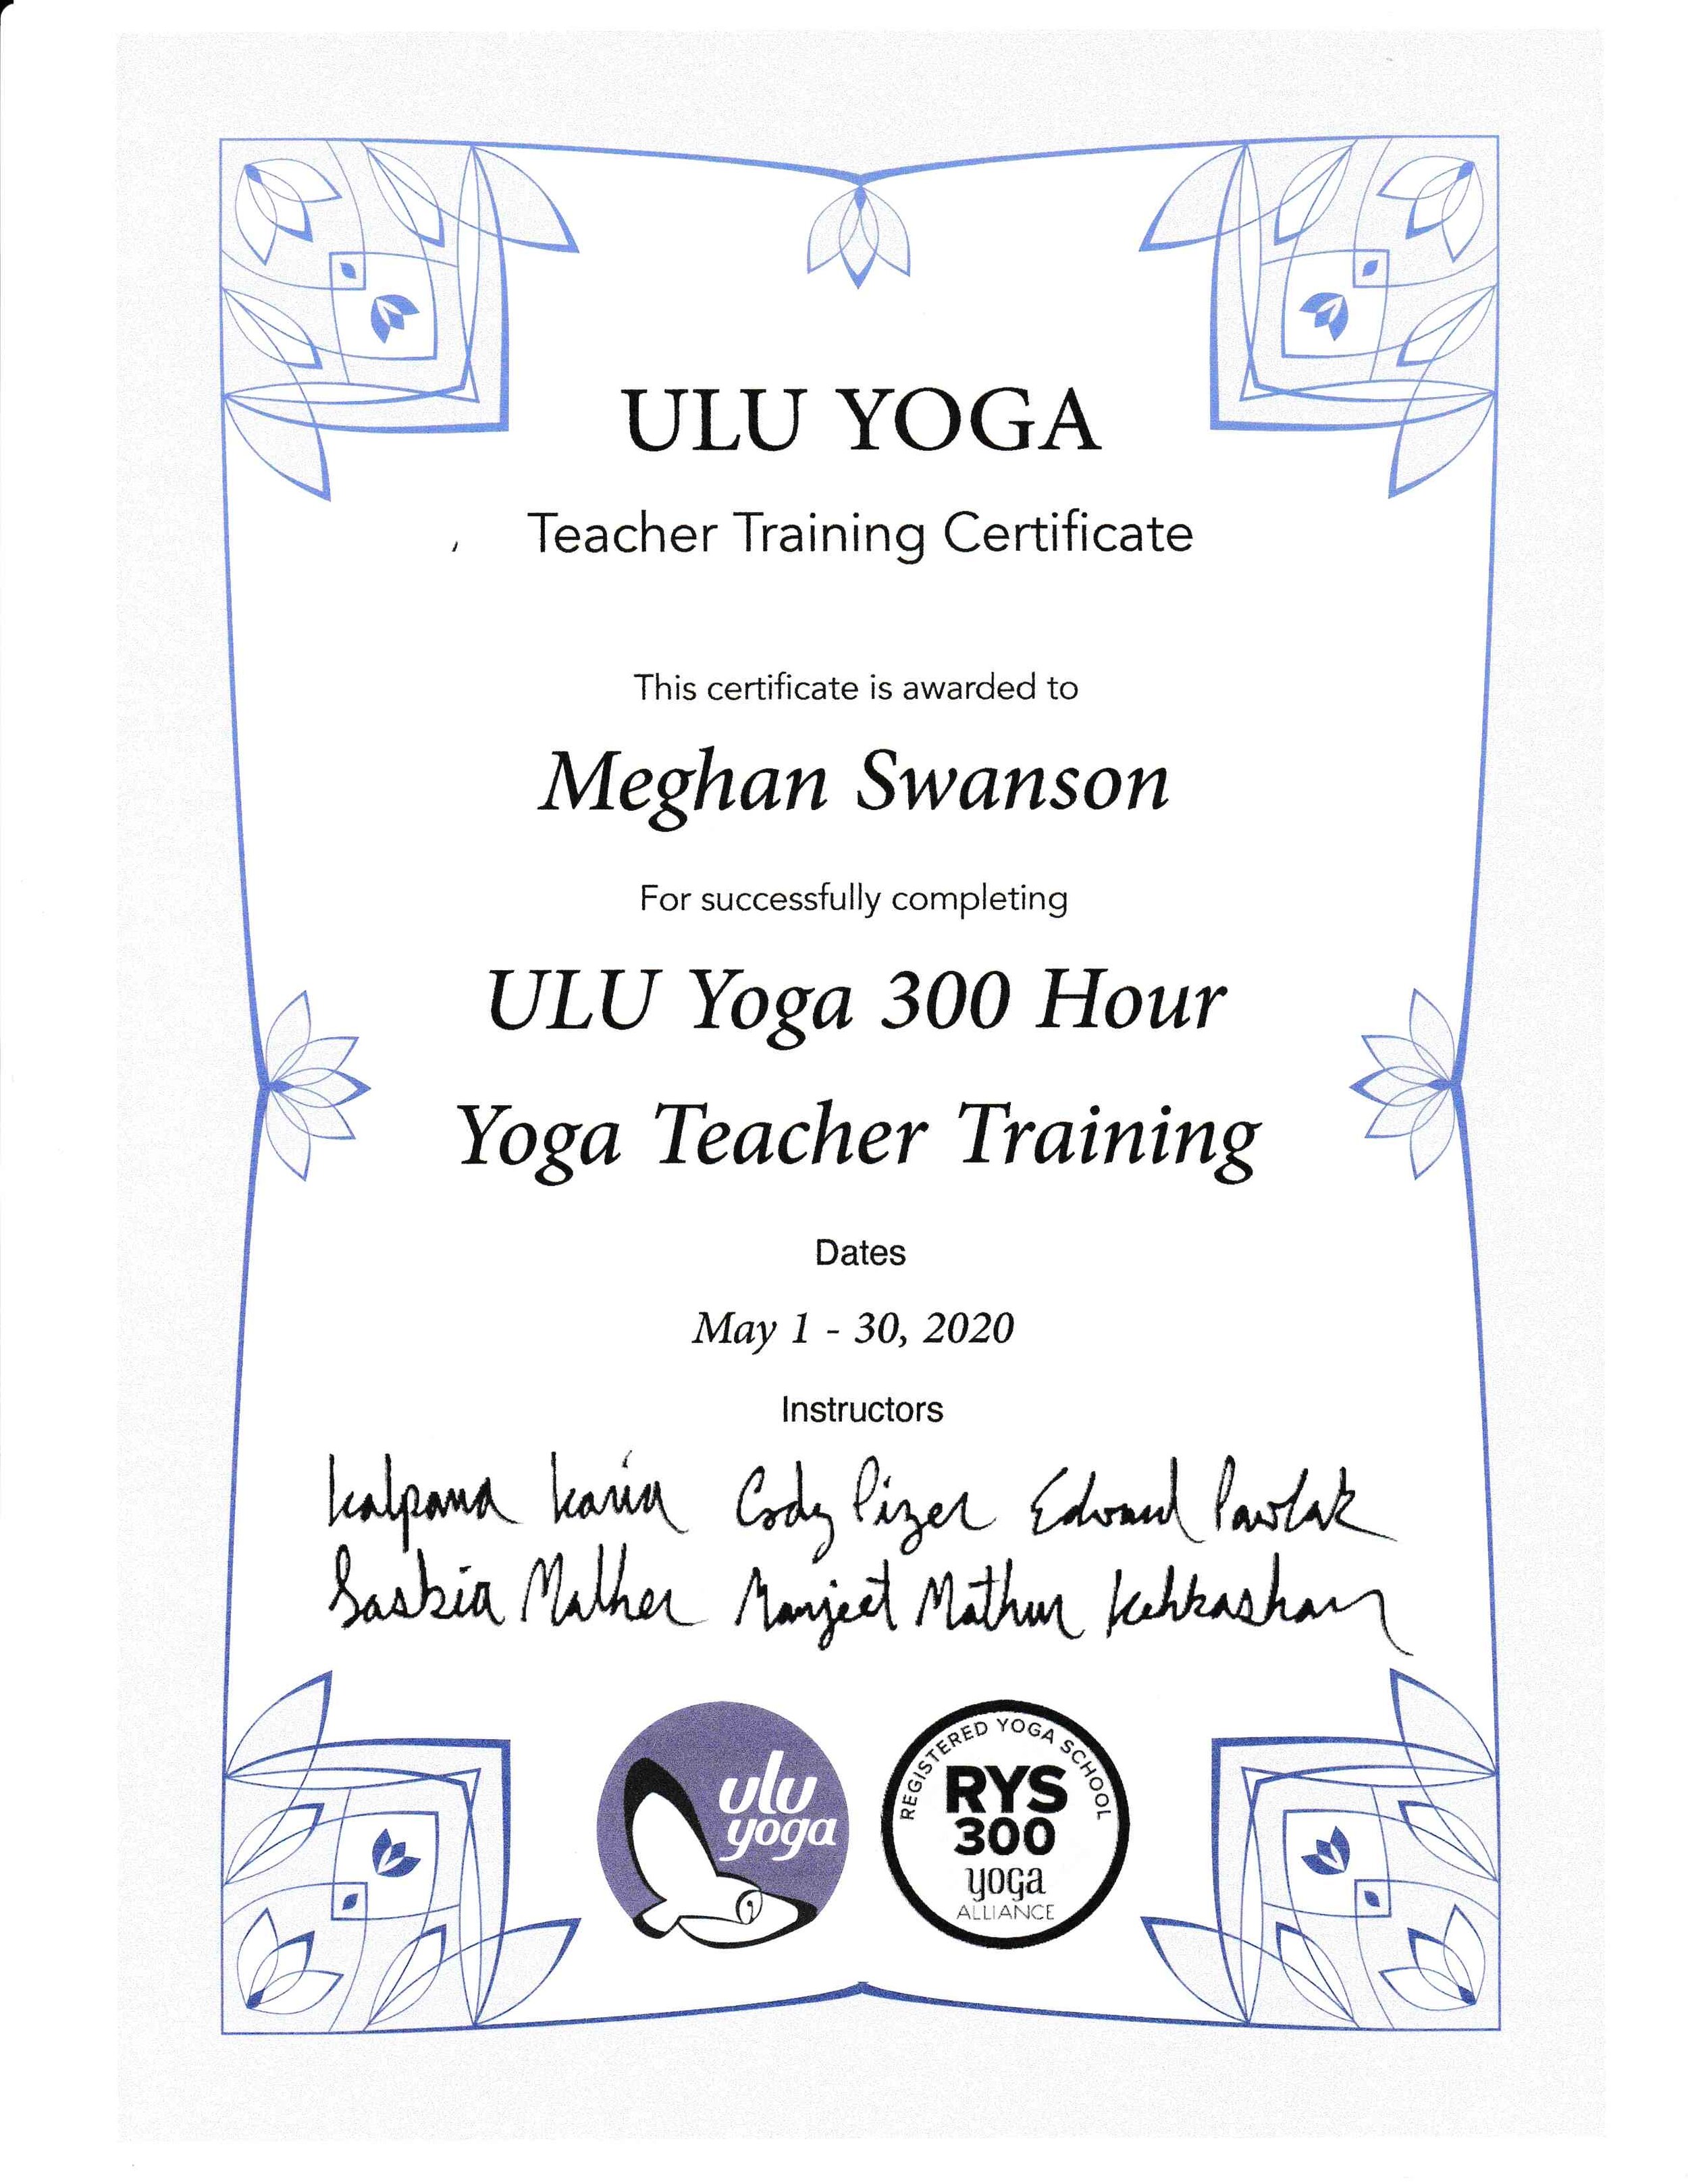 Meghan Swanson 300 hour yoga teacher training certificate (Copy)